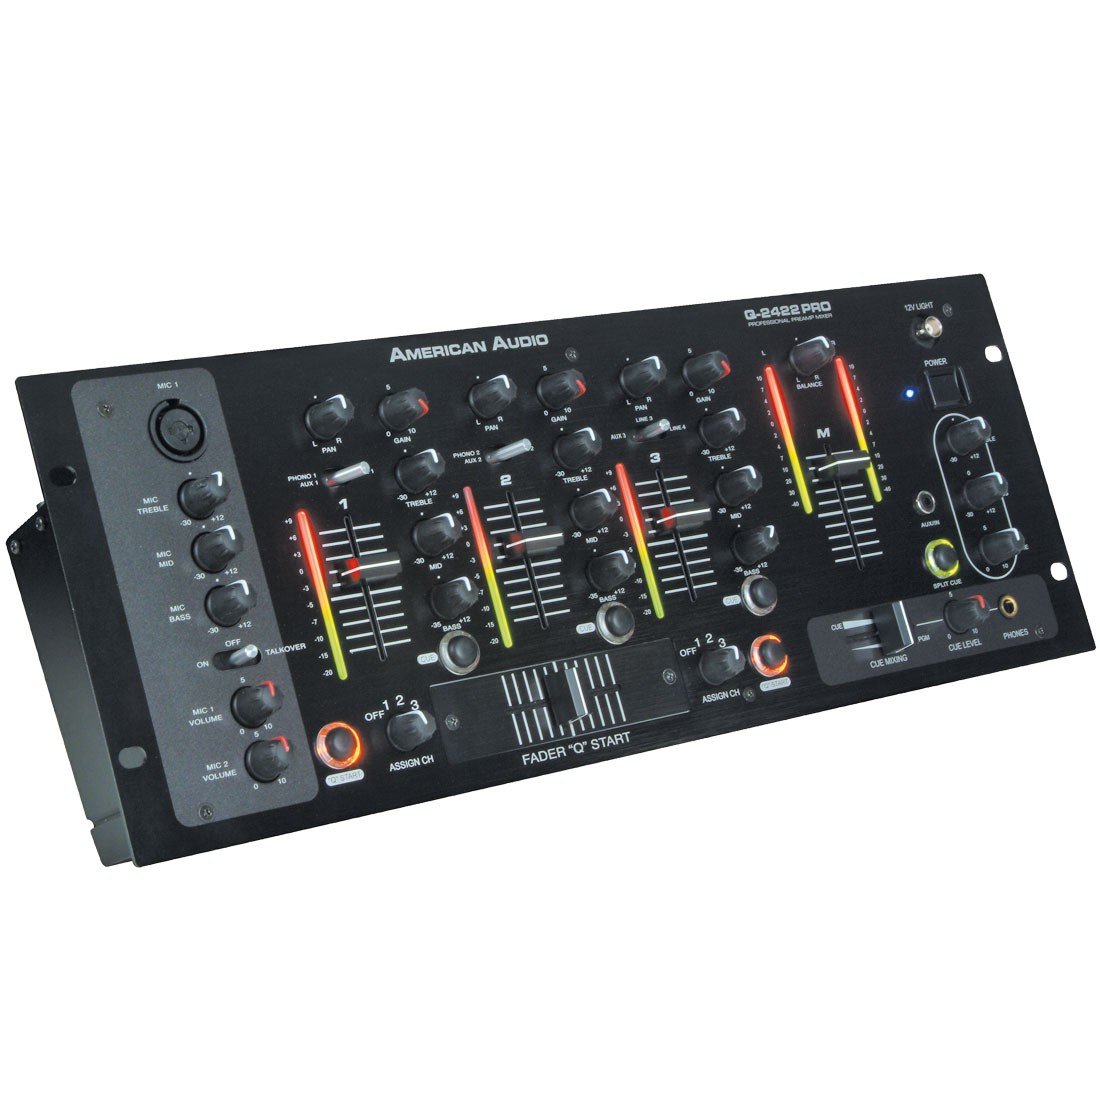 American Audio Q-2422 Pro Mixer